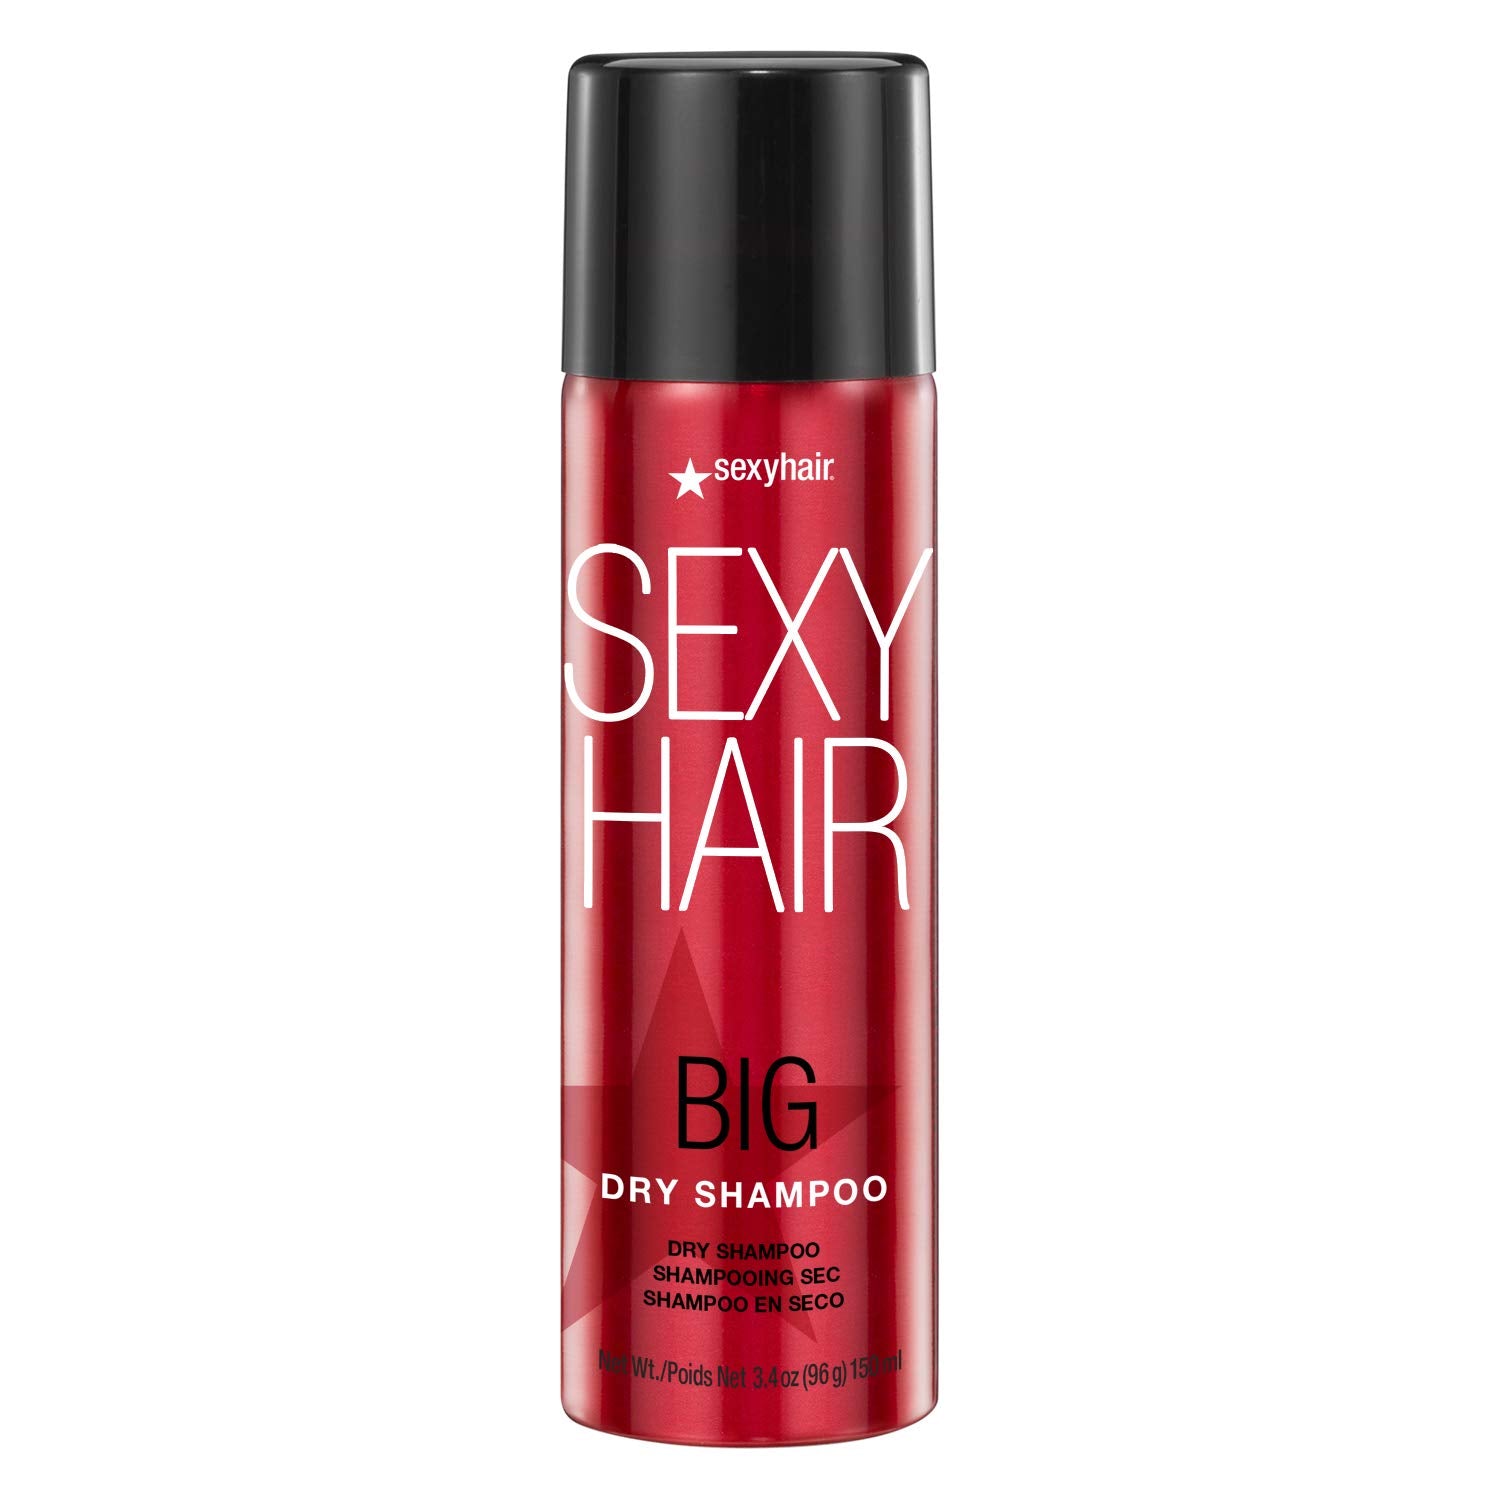 SexyHair Big Dry Shampoo - 3.4 oz (Buy 3 Get 1 Free Mix & Match)